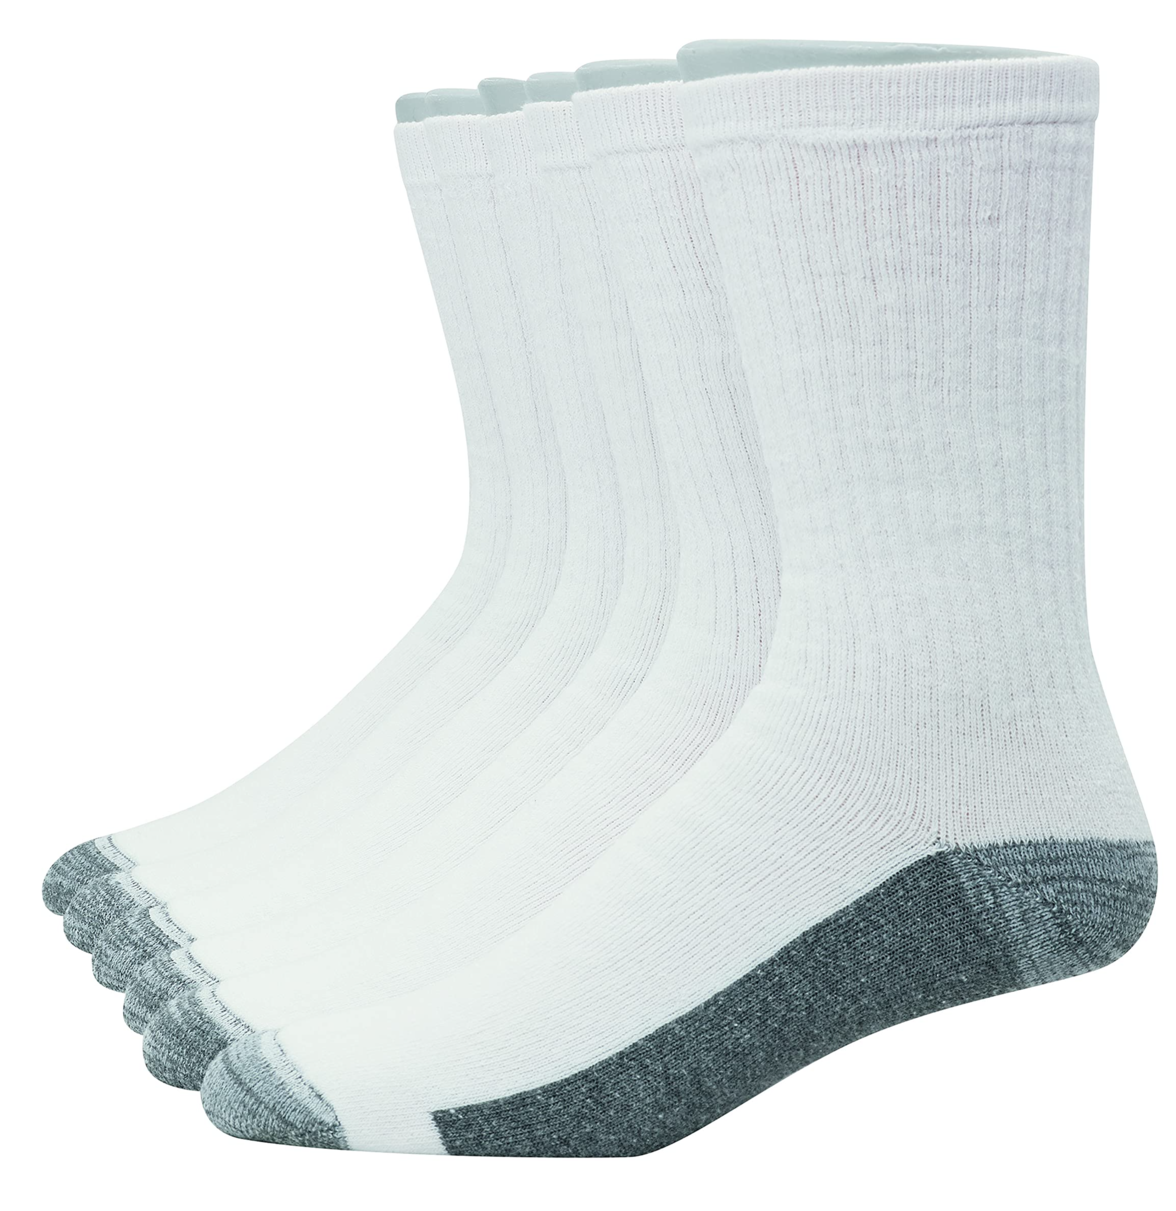 6-Pairs Hanes Men Ultra Cushion Crew Socks (White, FreshIQ Odor Control w/ Wicking) $10 + Free Shipping w/ Prime or on $25+